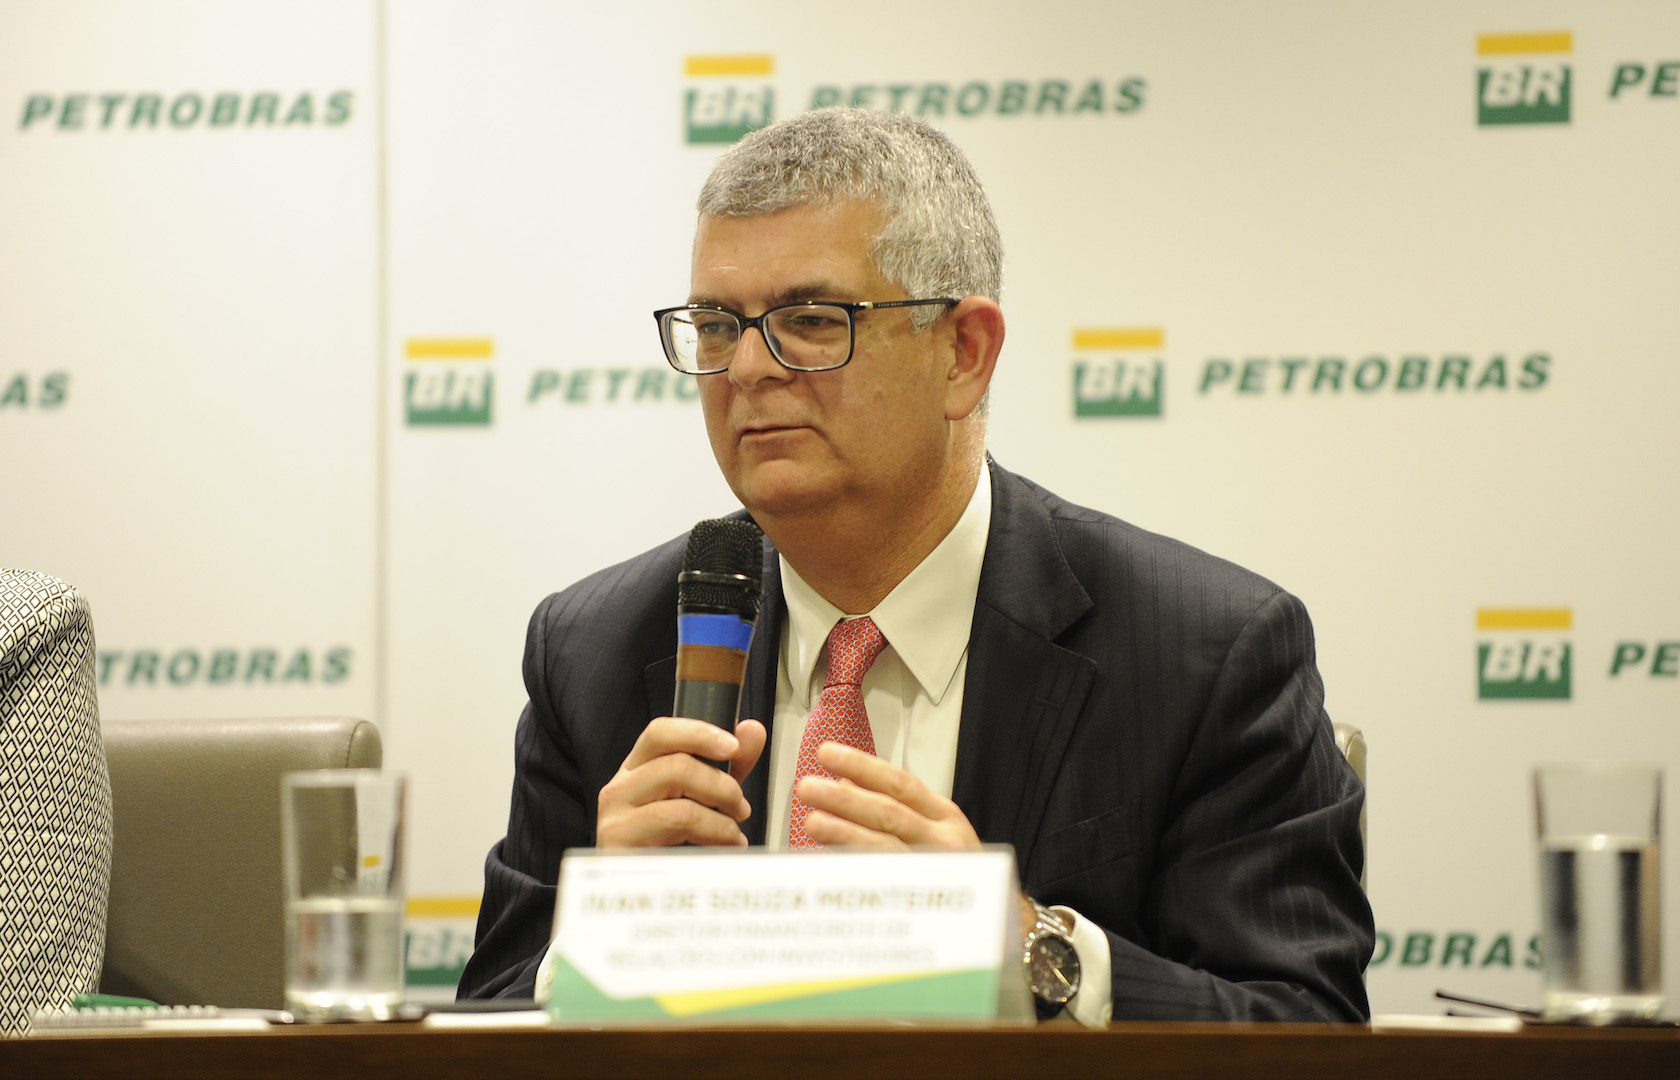 Brazil’s Petrobras Registers R$3.76 Billion Loss in Q3